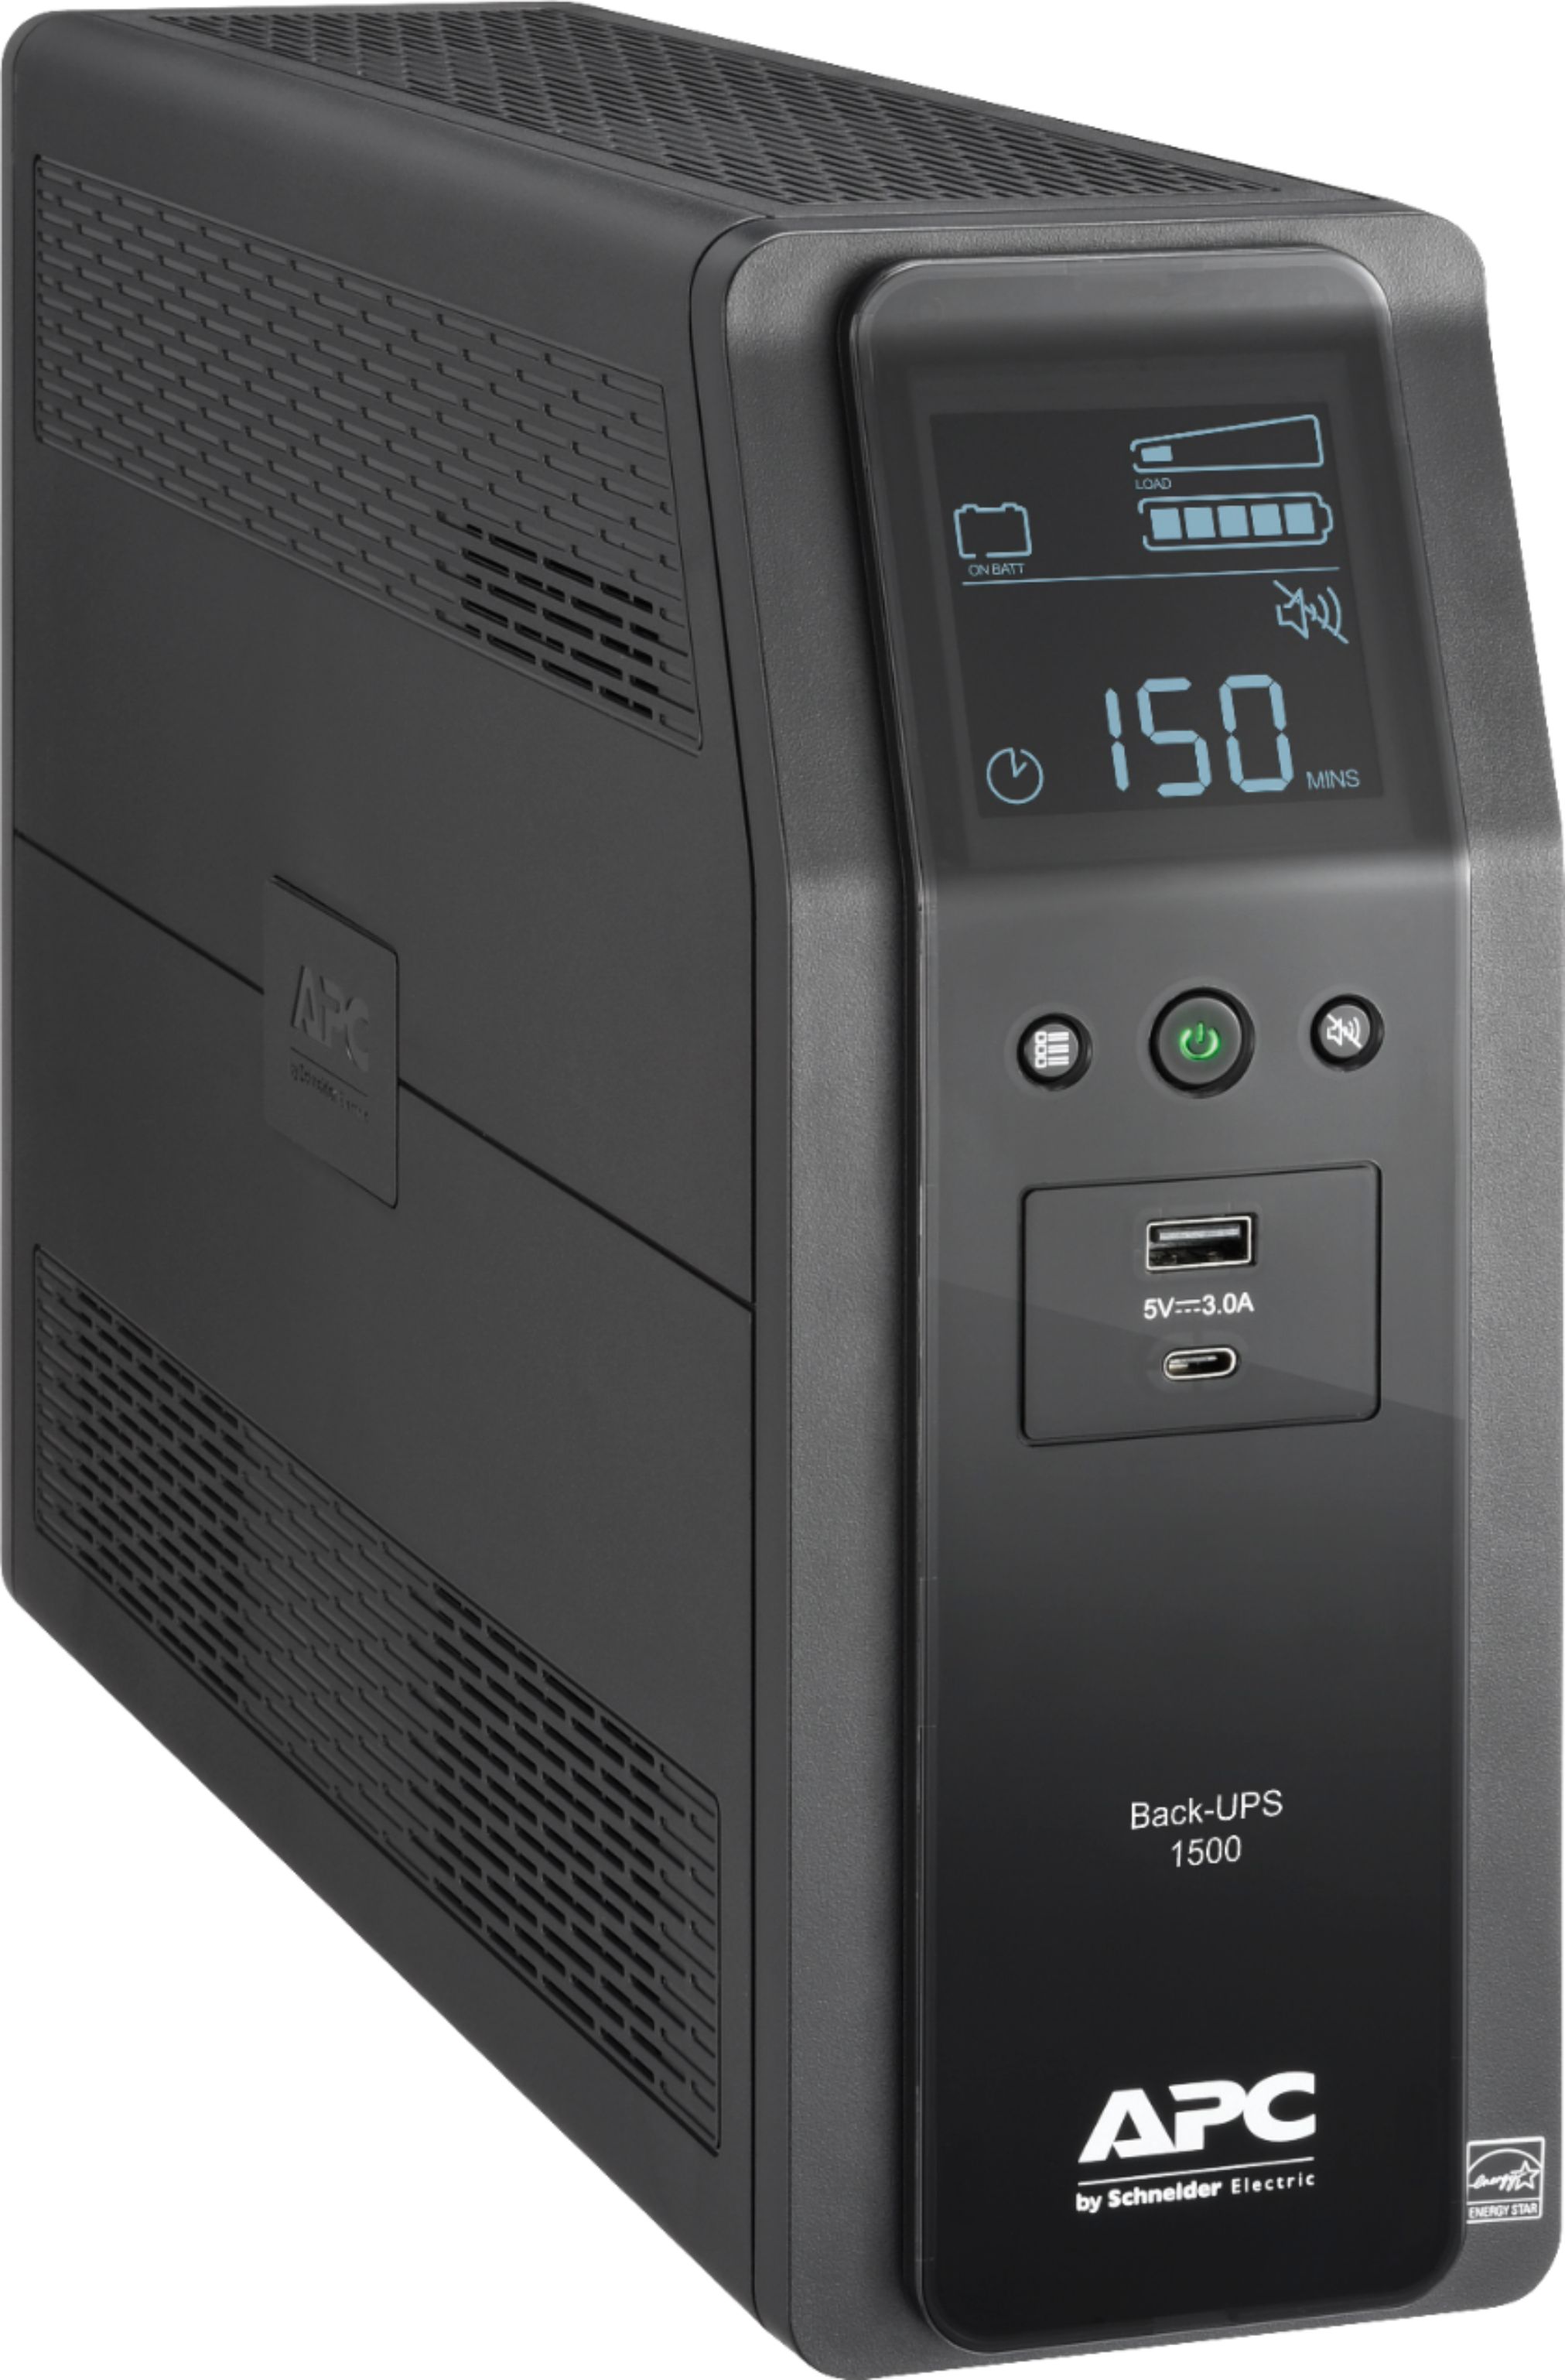 APC Back-UPS Pro 1500VA AVR/LCD Battery Backup/Surge Protector